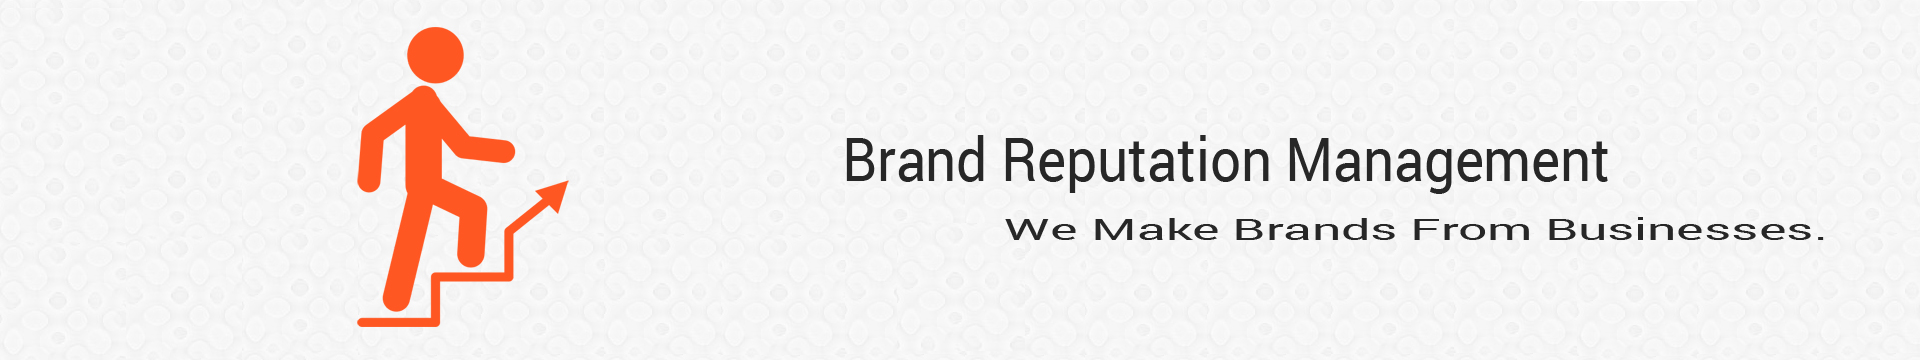 Brand Reputation Management